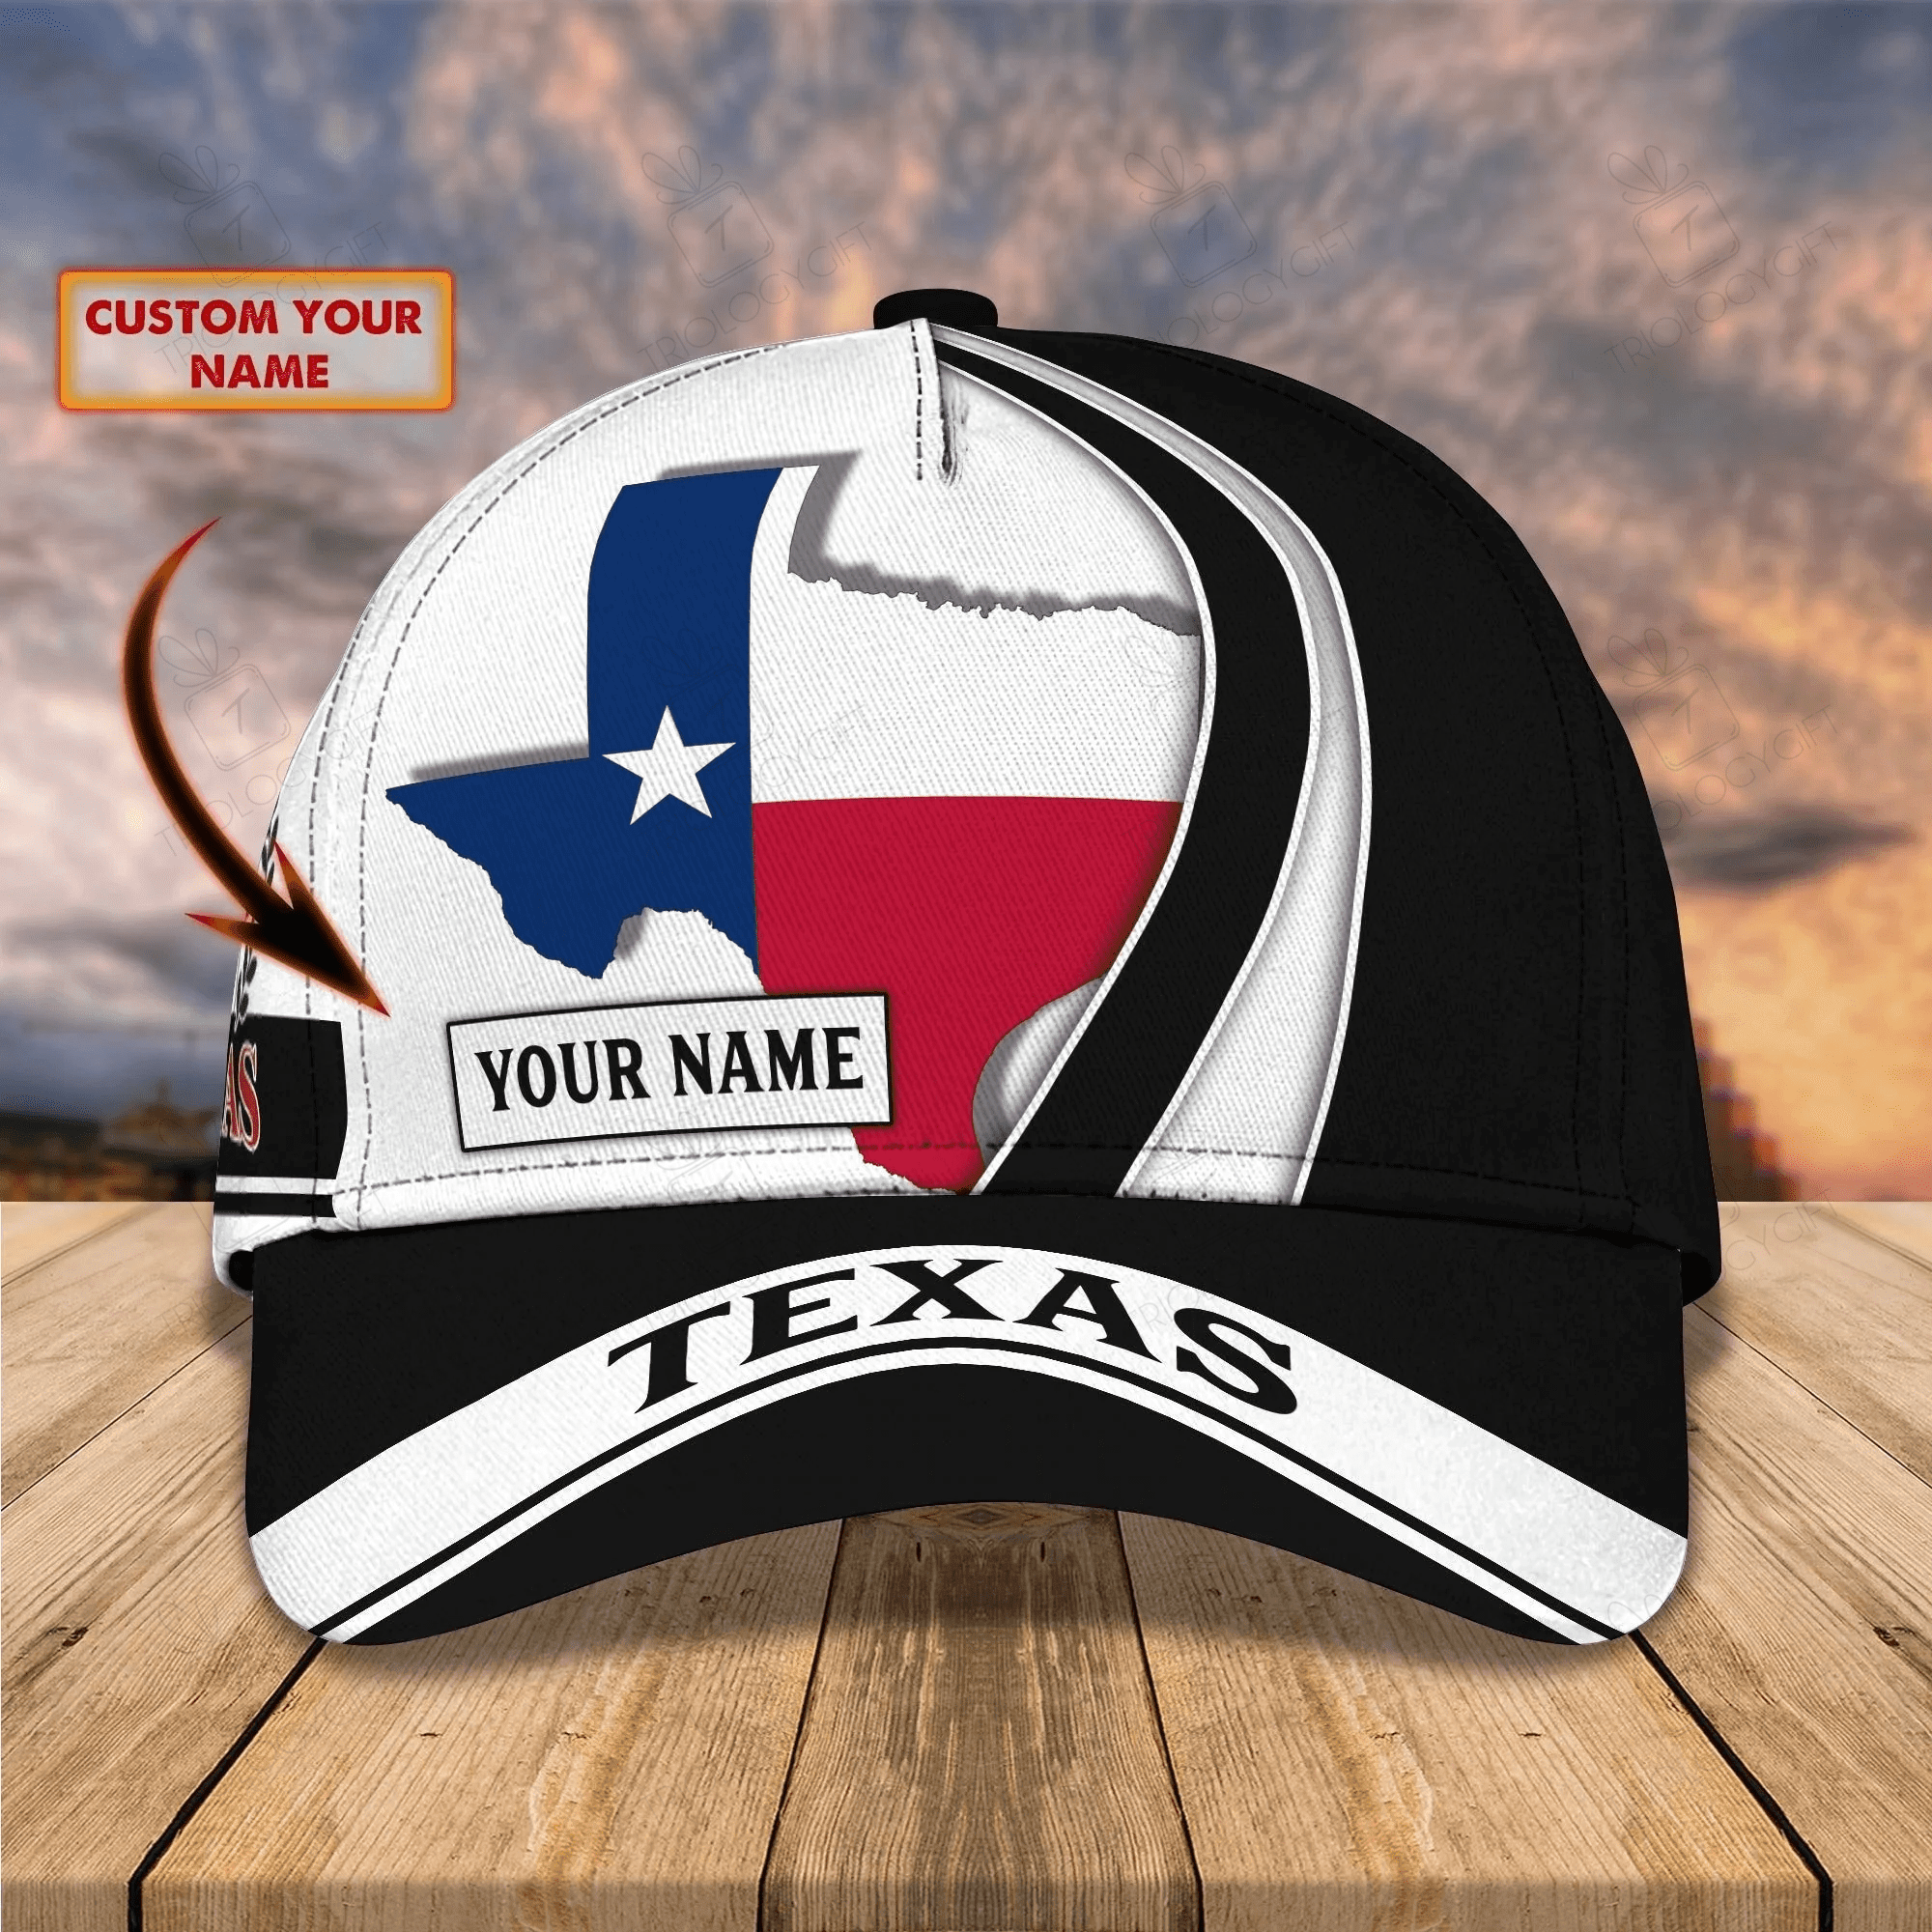 Personalized Name 3D Full Printing Texas Cap, Texas Baseball Classic Cap Hat